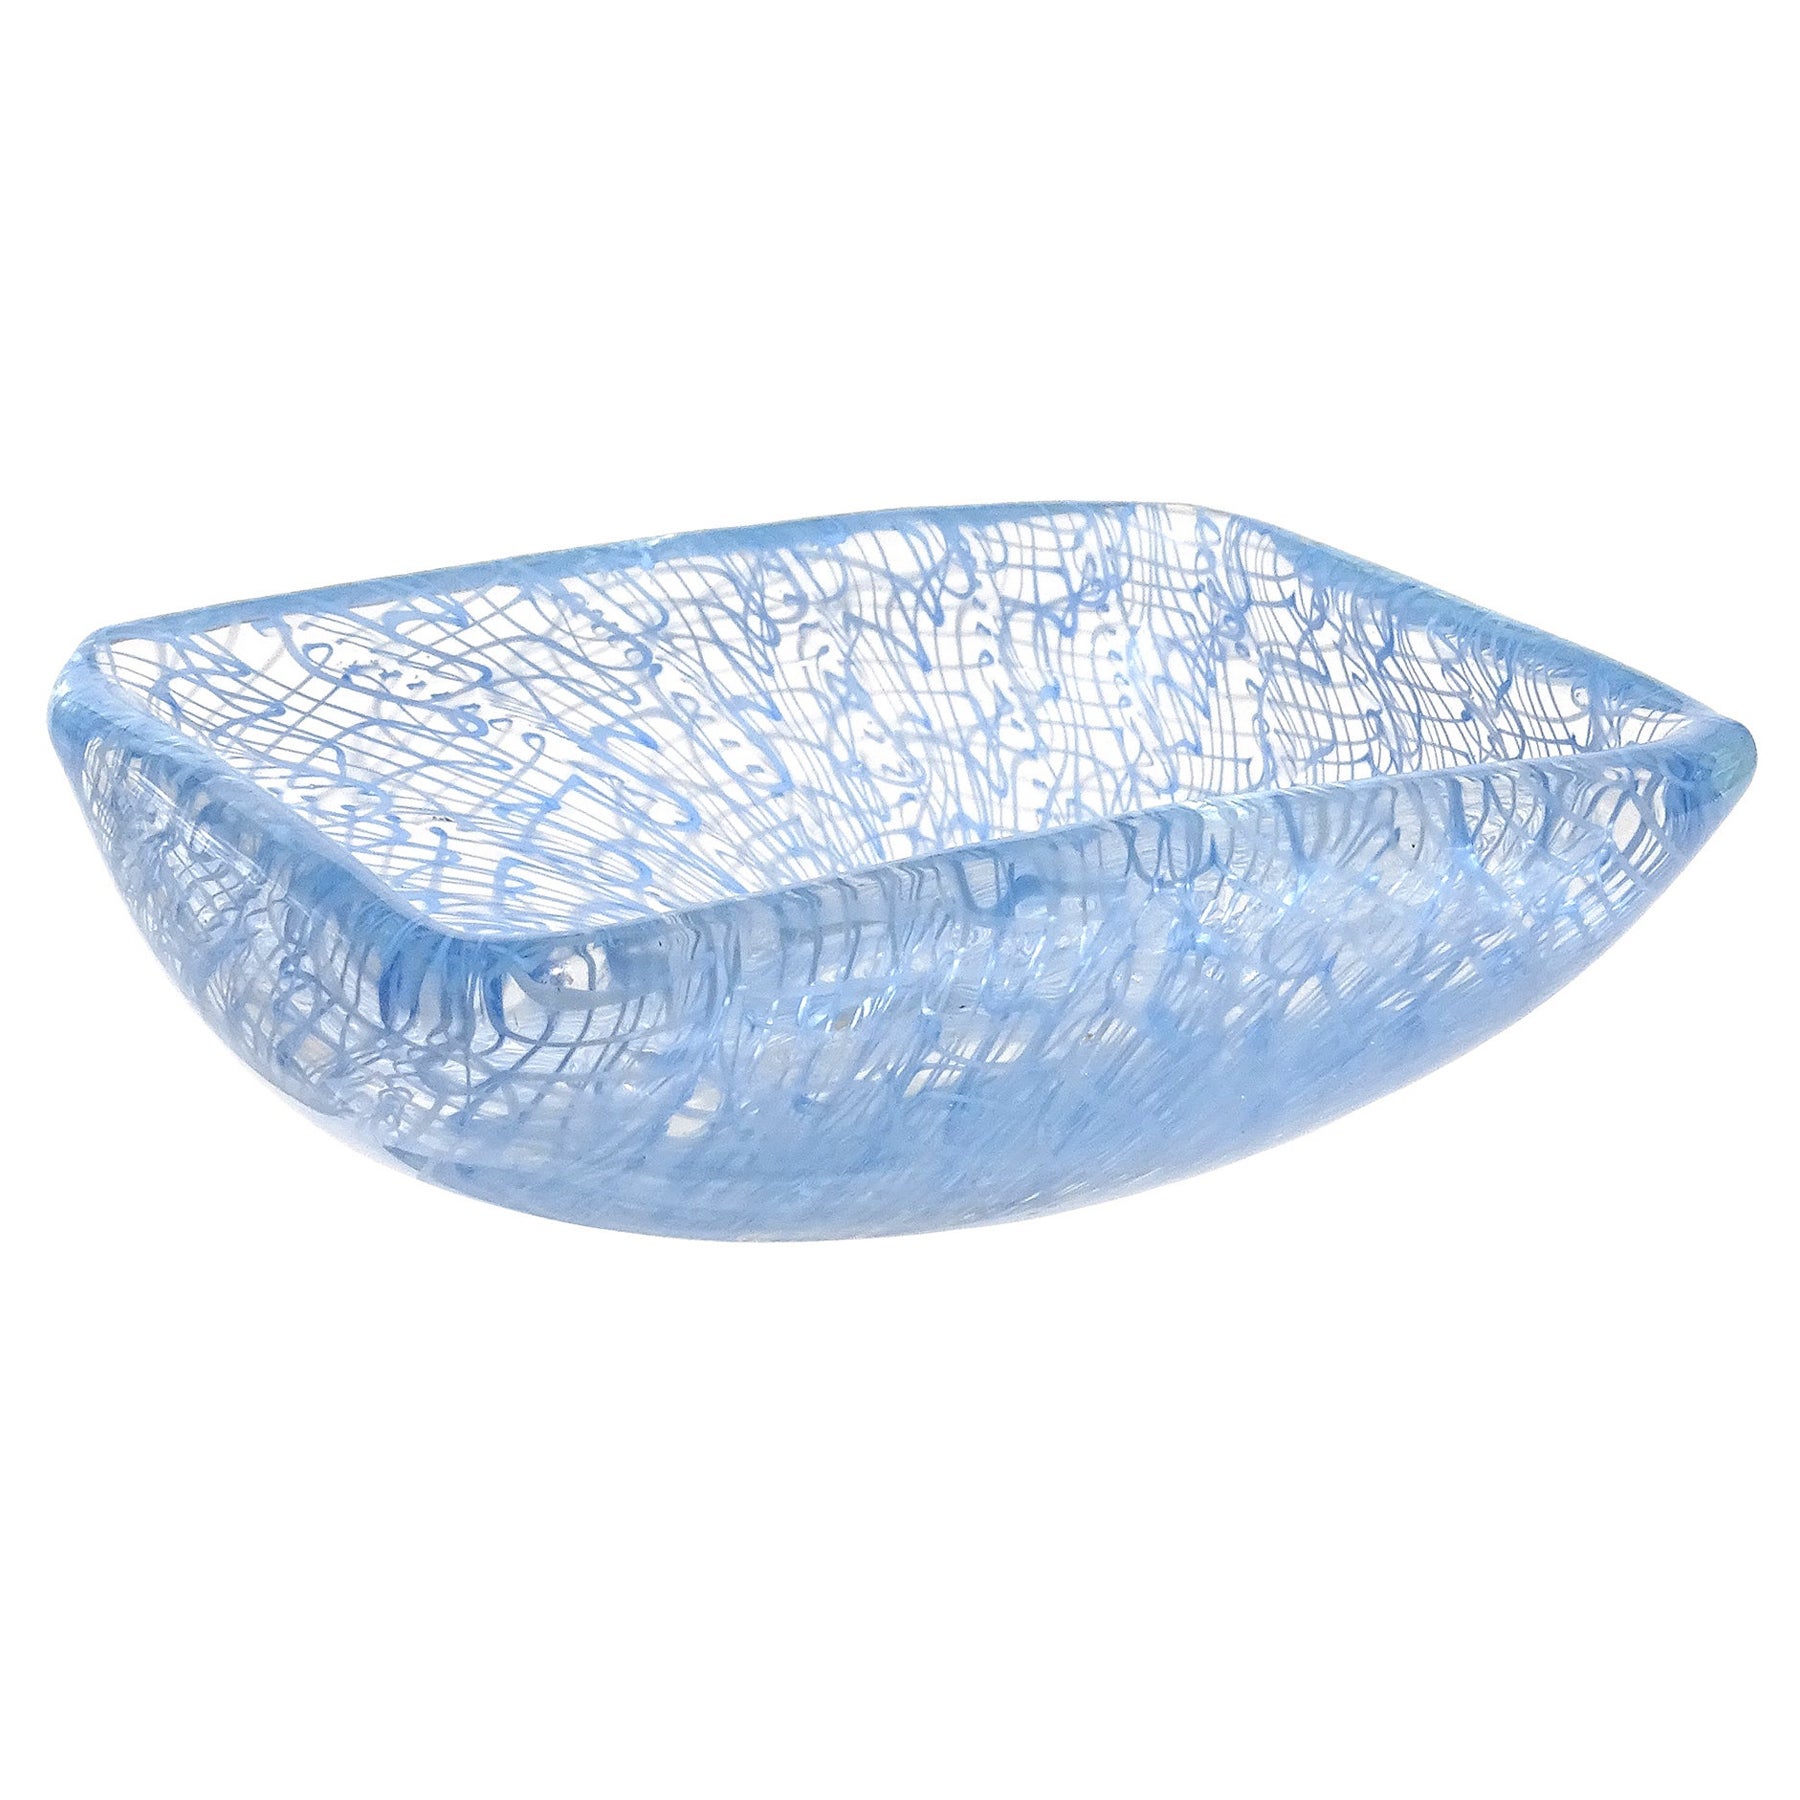 Seguso Murano 1954 Sky Blue Merletto Ribbons Italian Art Glass Ring Dish Bowl